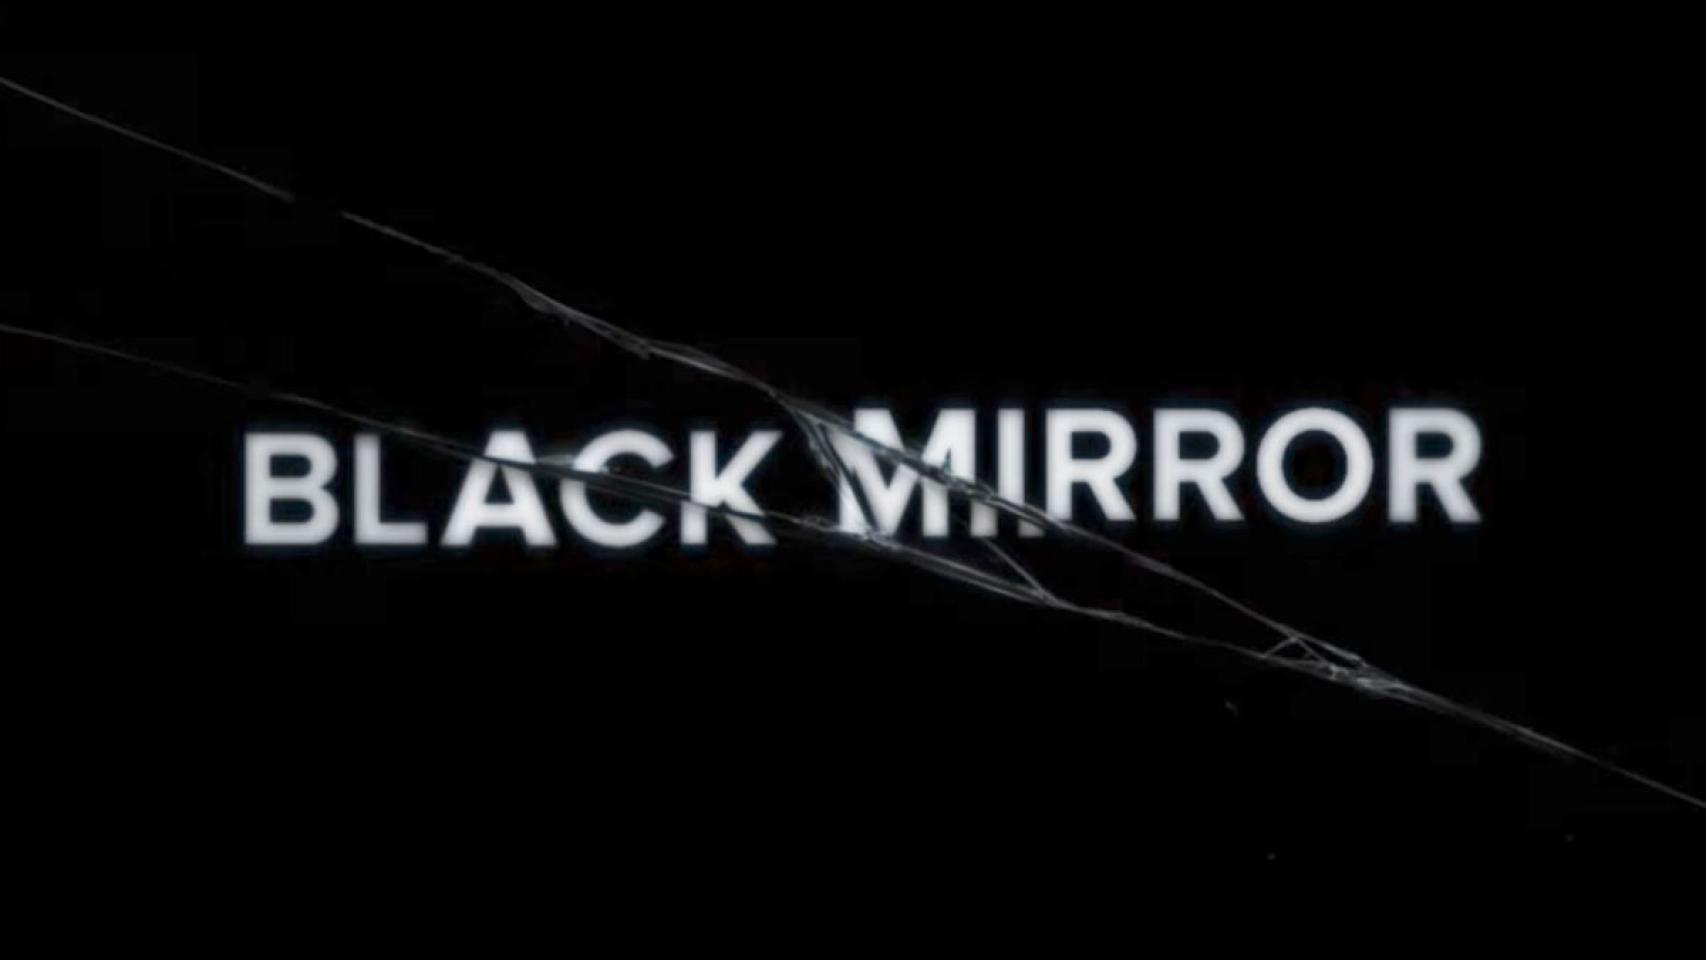 black-mirror-logo